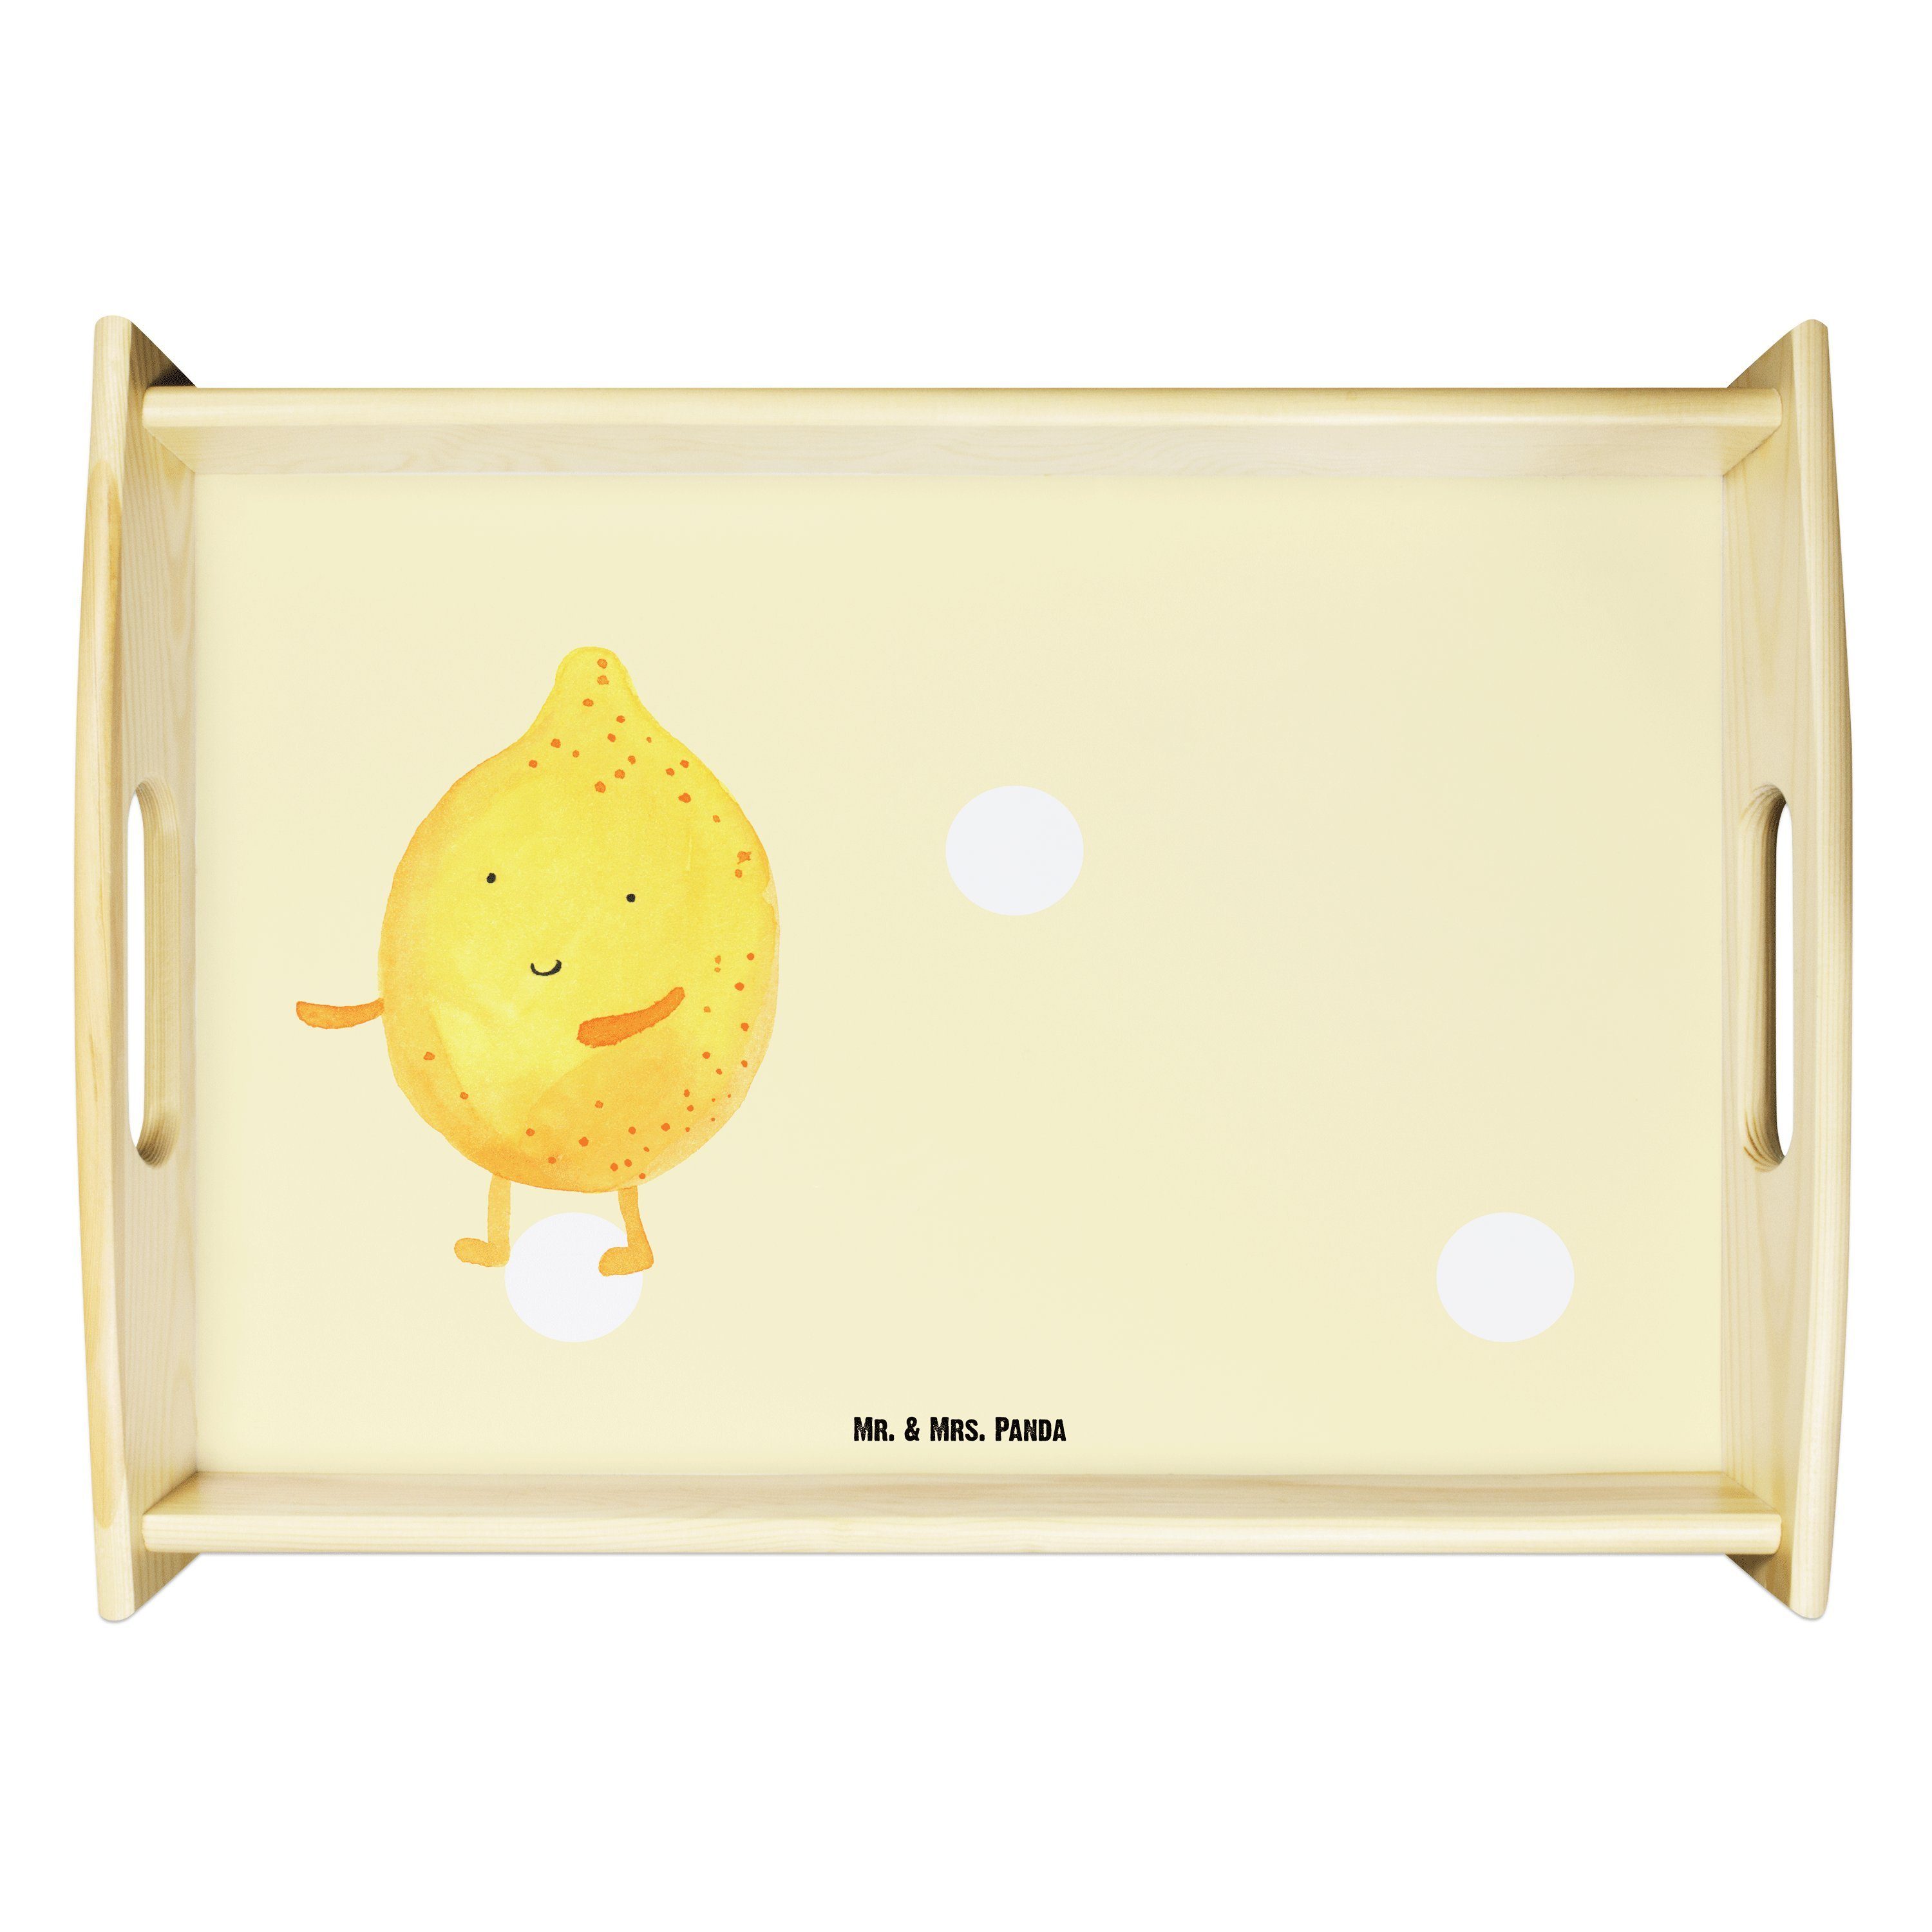 Mr. & Mrs. Panda Tablett BestFriends-Lemon - Gelb Pastell - Geschenk, Holztablett, Tiermotive, Echtholz lasiert, (1-tlg)